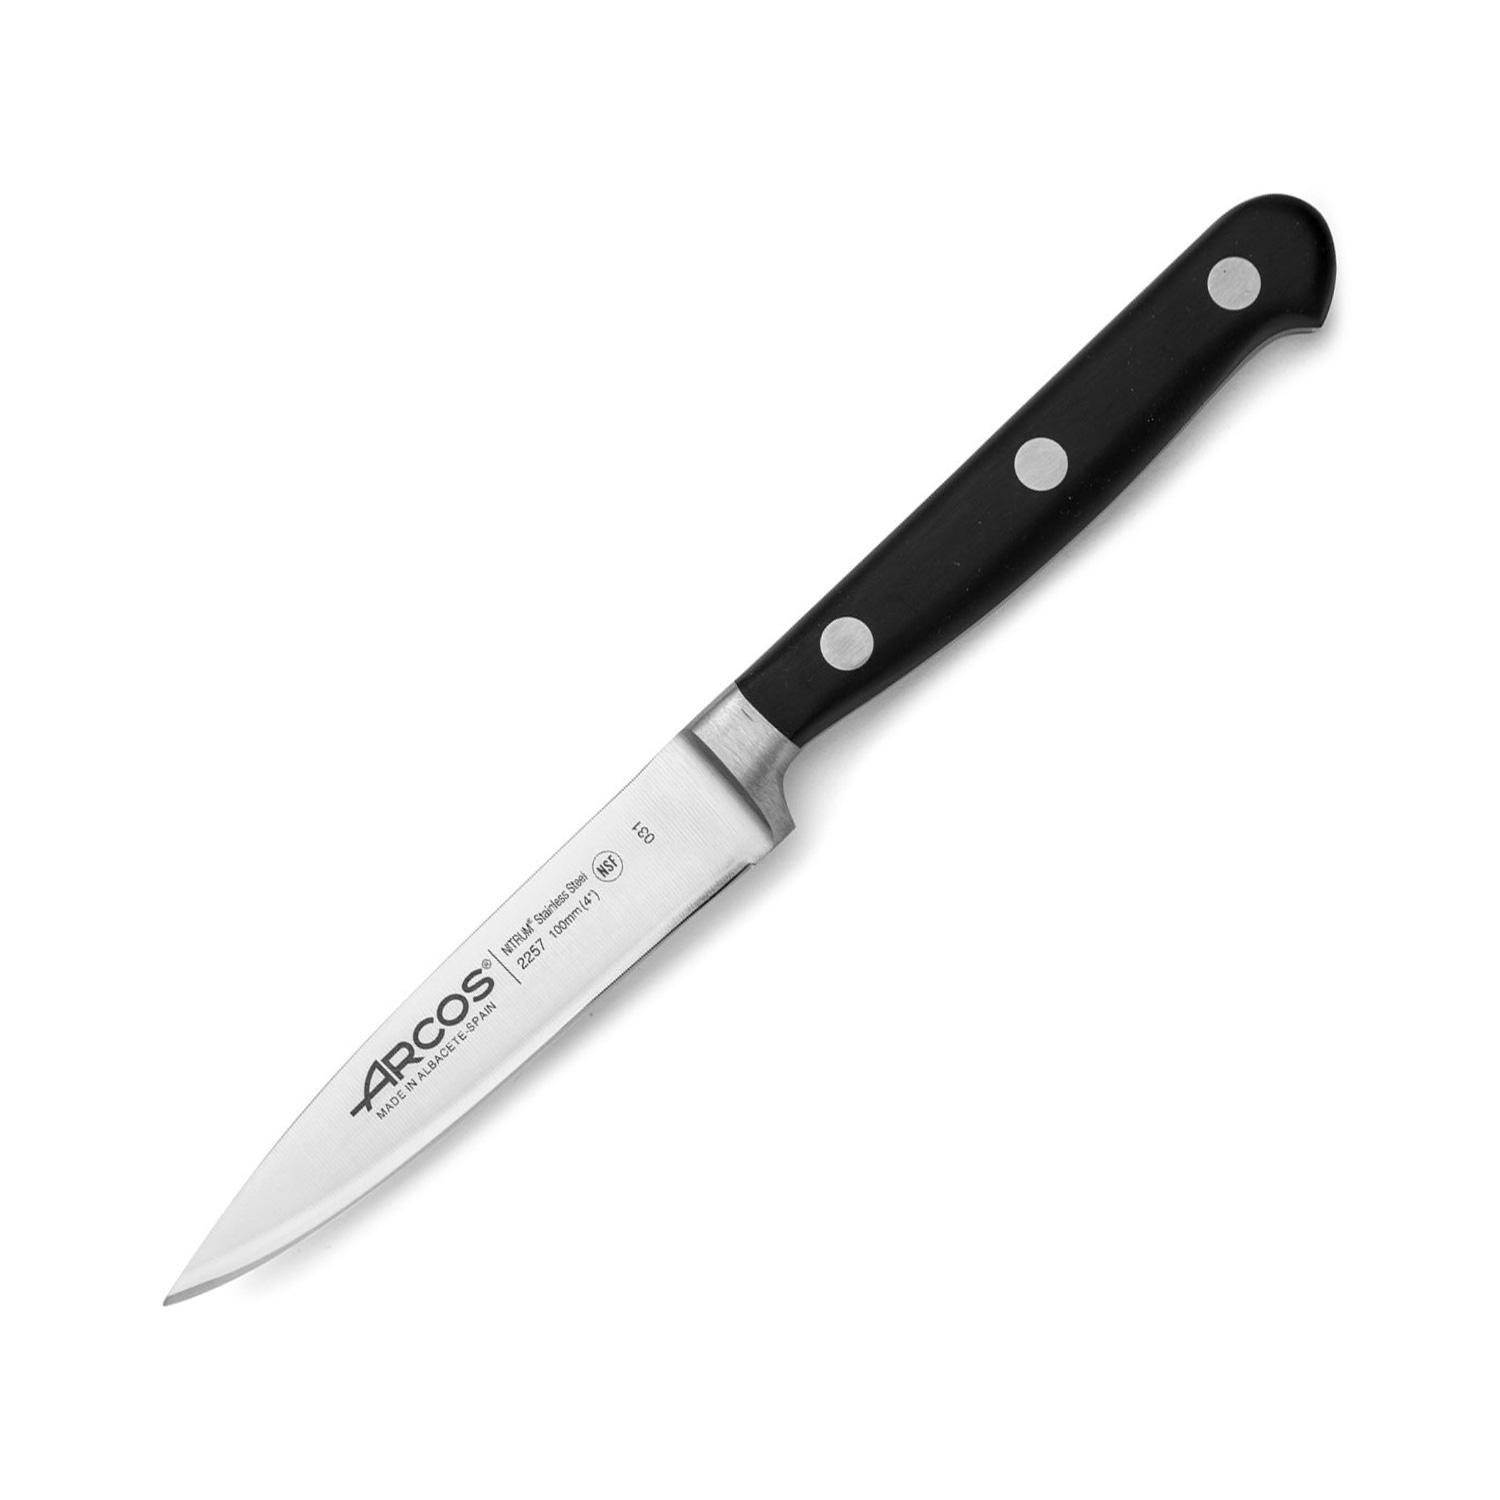 Ножи Arcos Brooklyn со скидкой до 27%! — Arcos